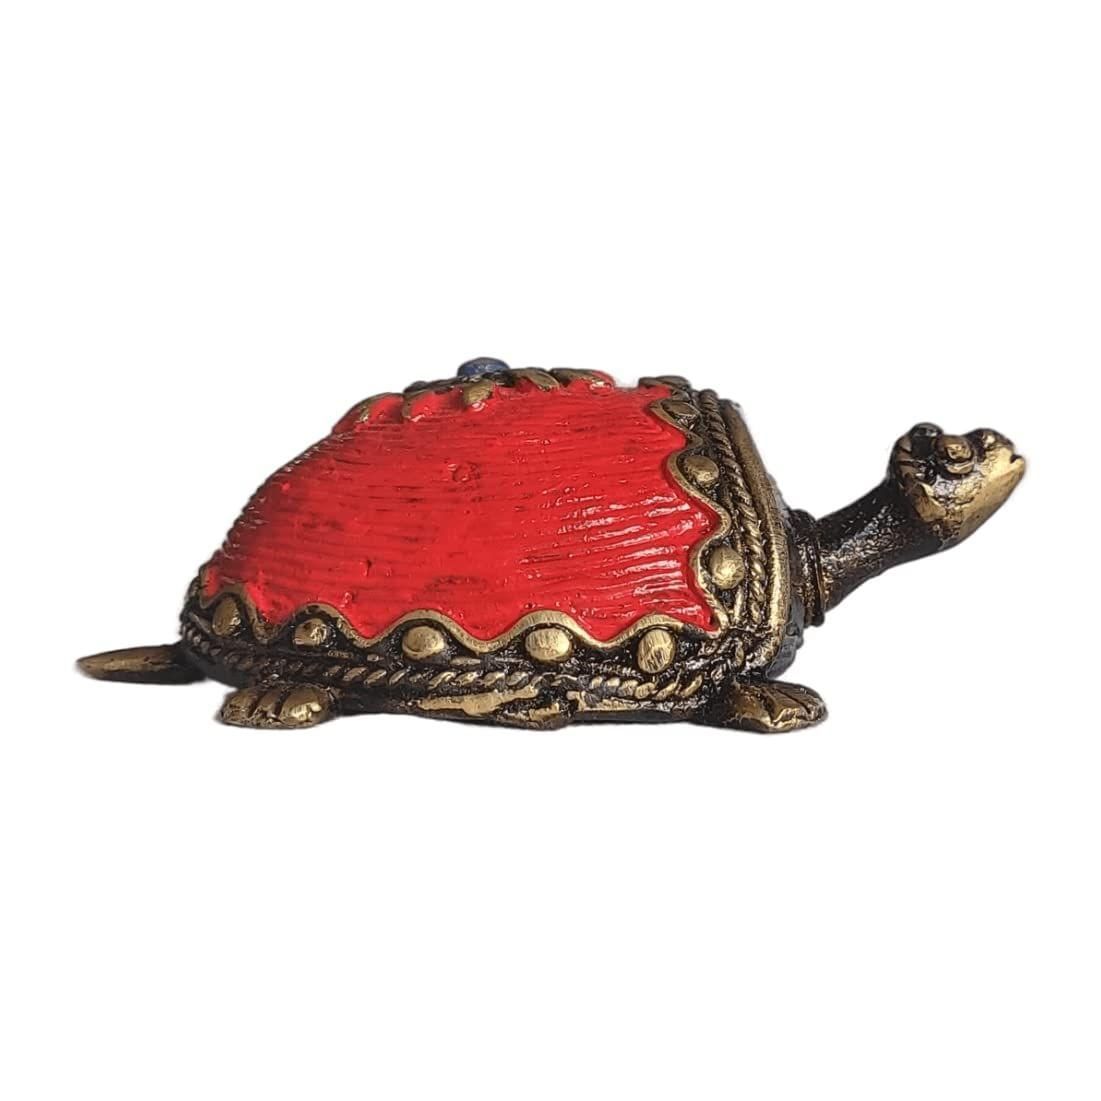 Theallchemy Dhokra Art Bell Metal Red Tortoise Spiritua Showpiece Home Decor Items Tribal Art & Crafts